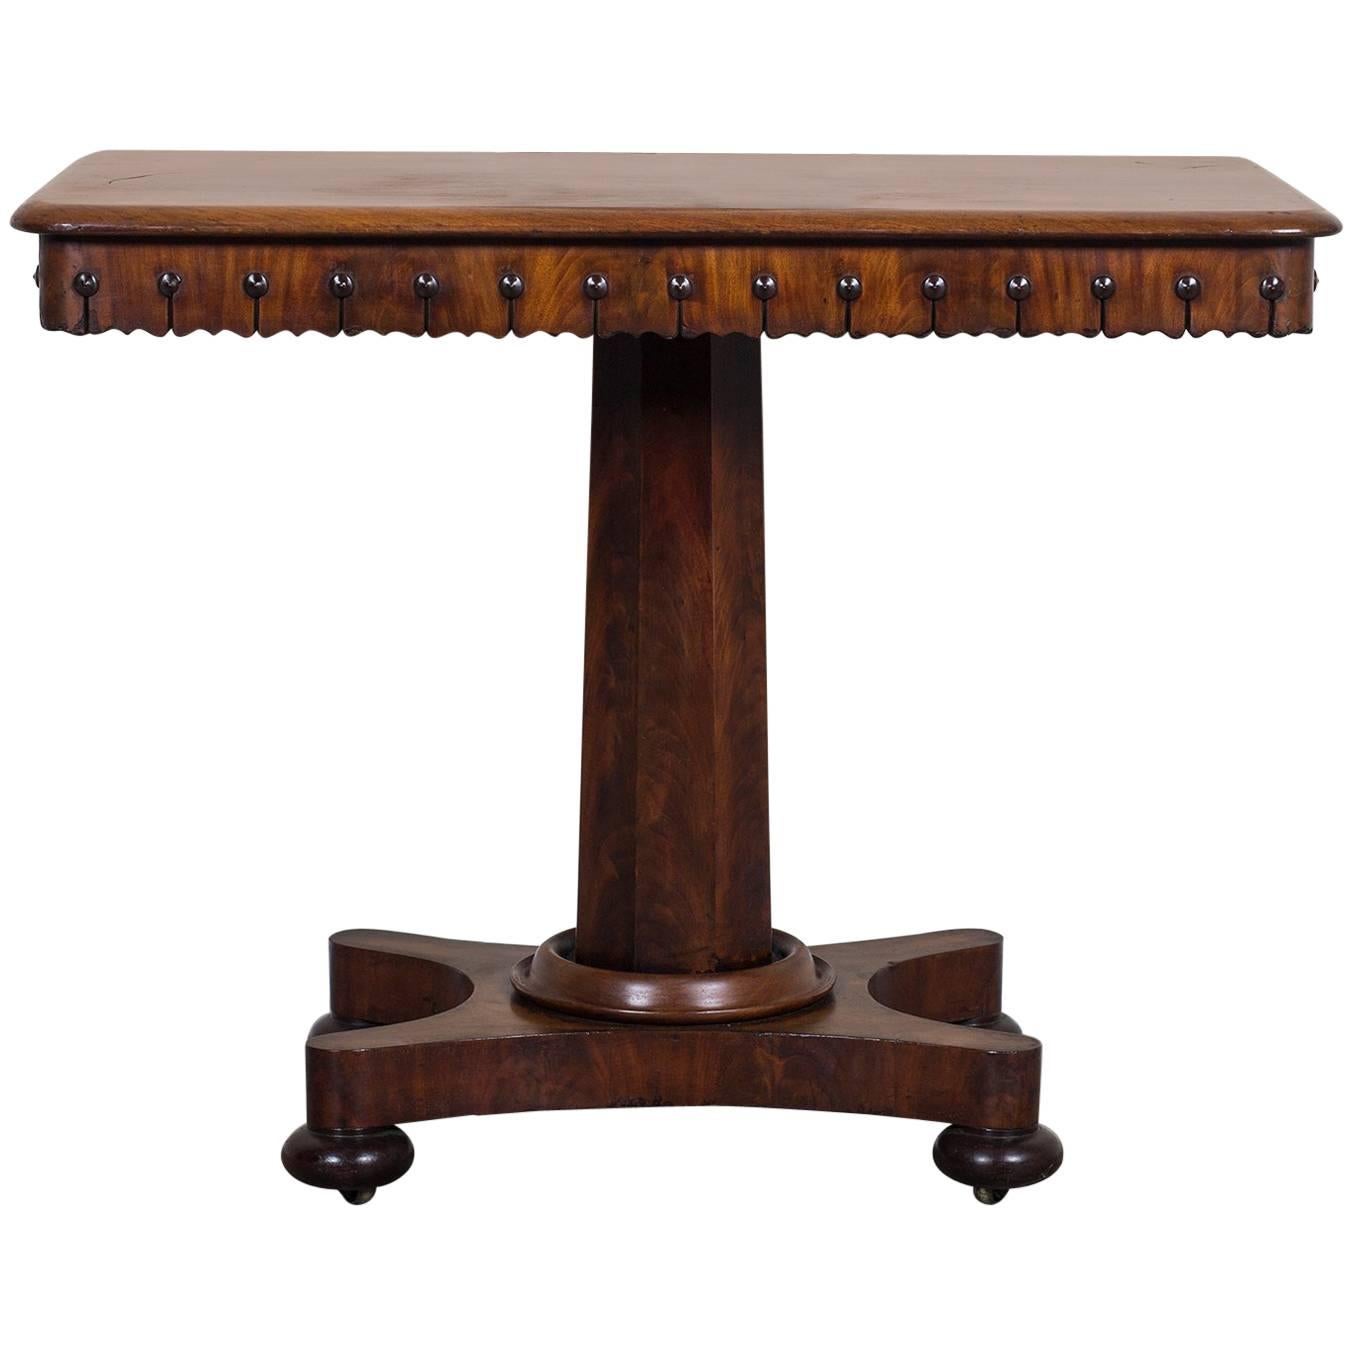 Antique English William IV Mahogany Table, circa 1835